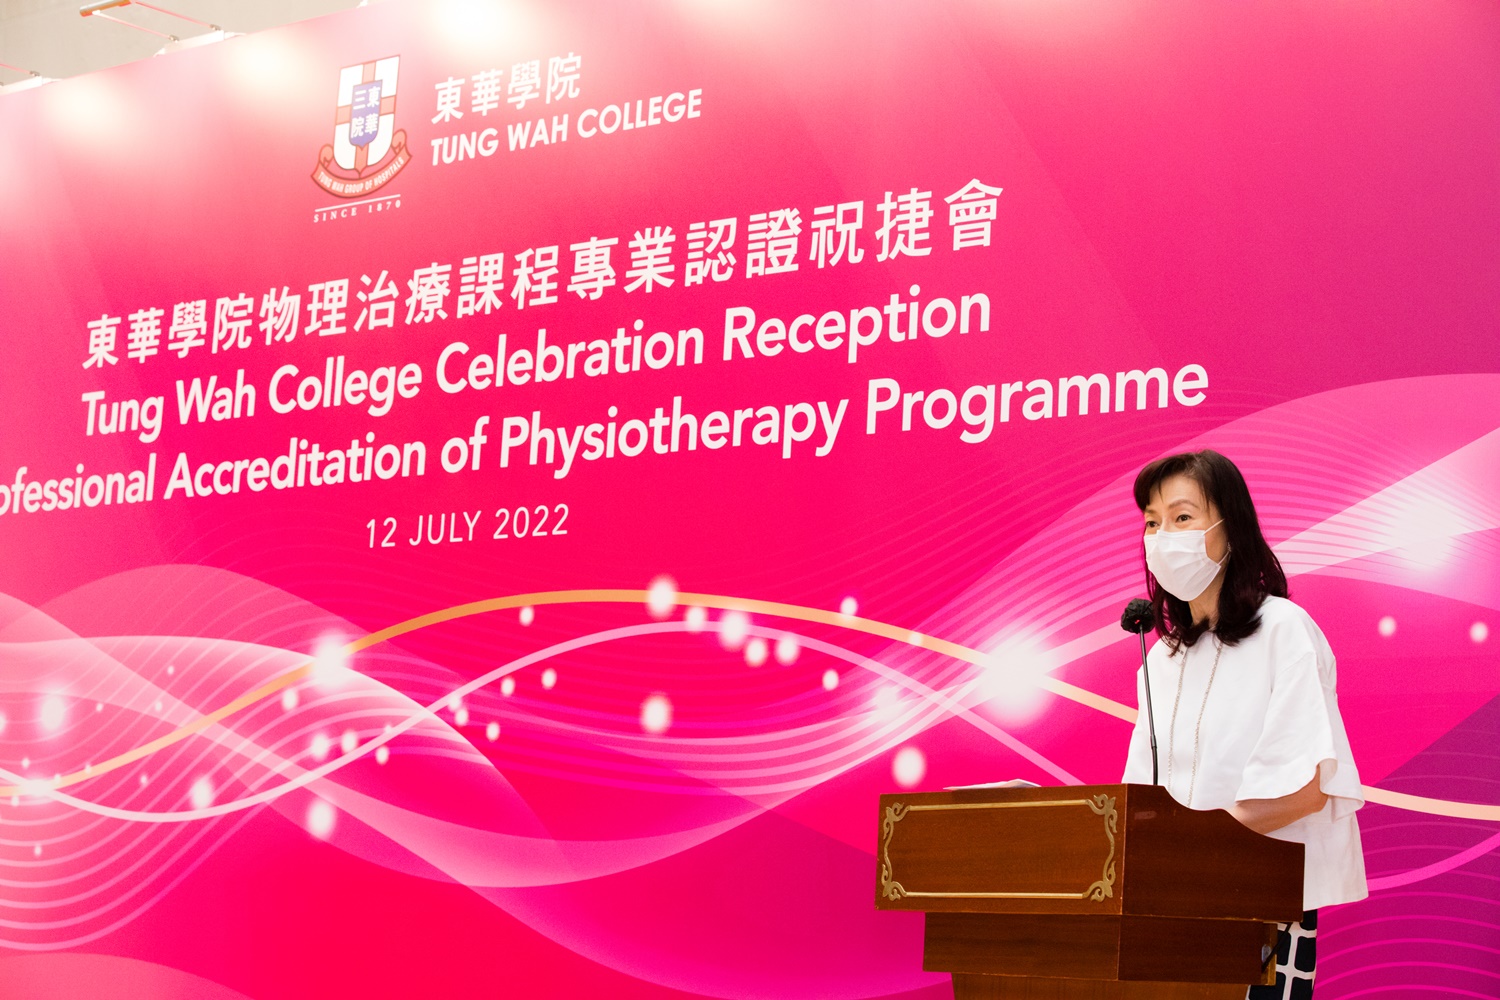 Speech by Mrs. Viola Chan Man Yee-wai, BBS, Chairman of College Council of TWC.